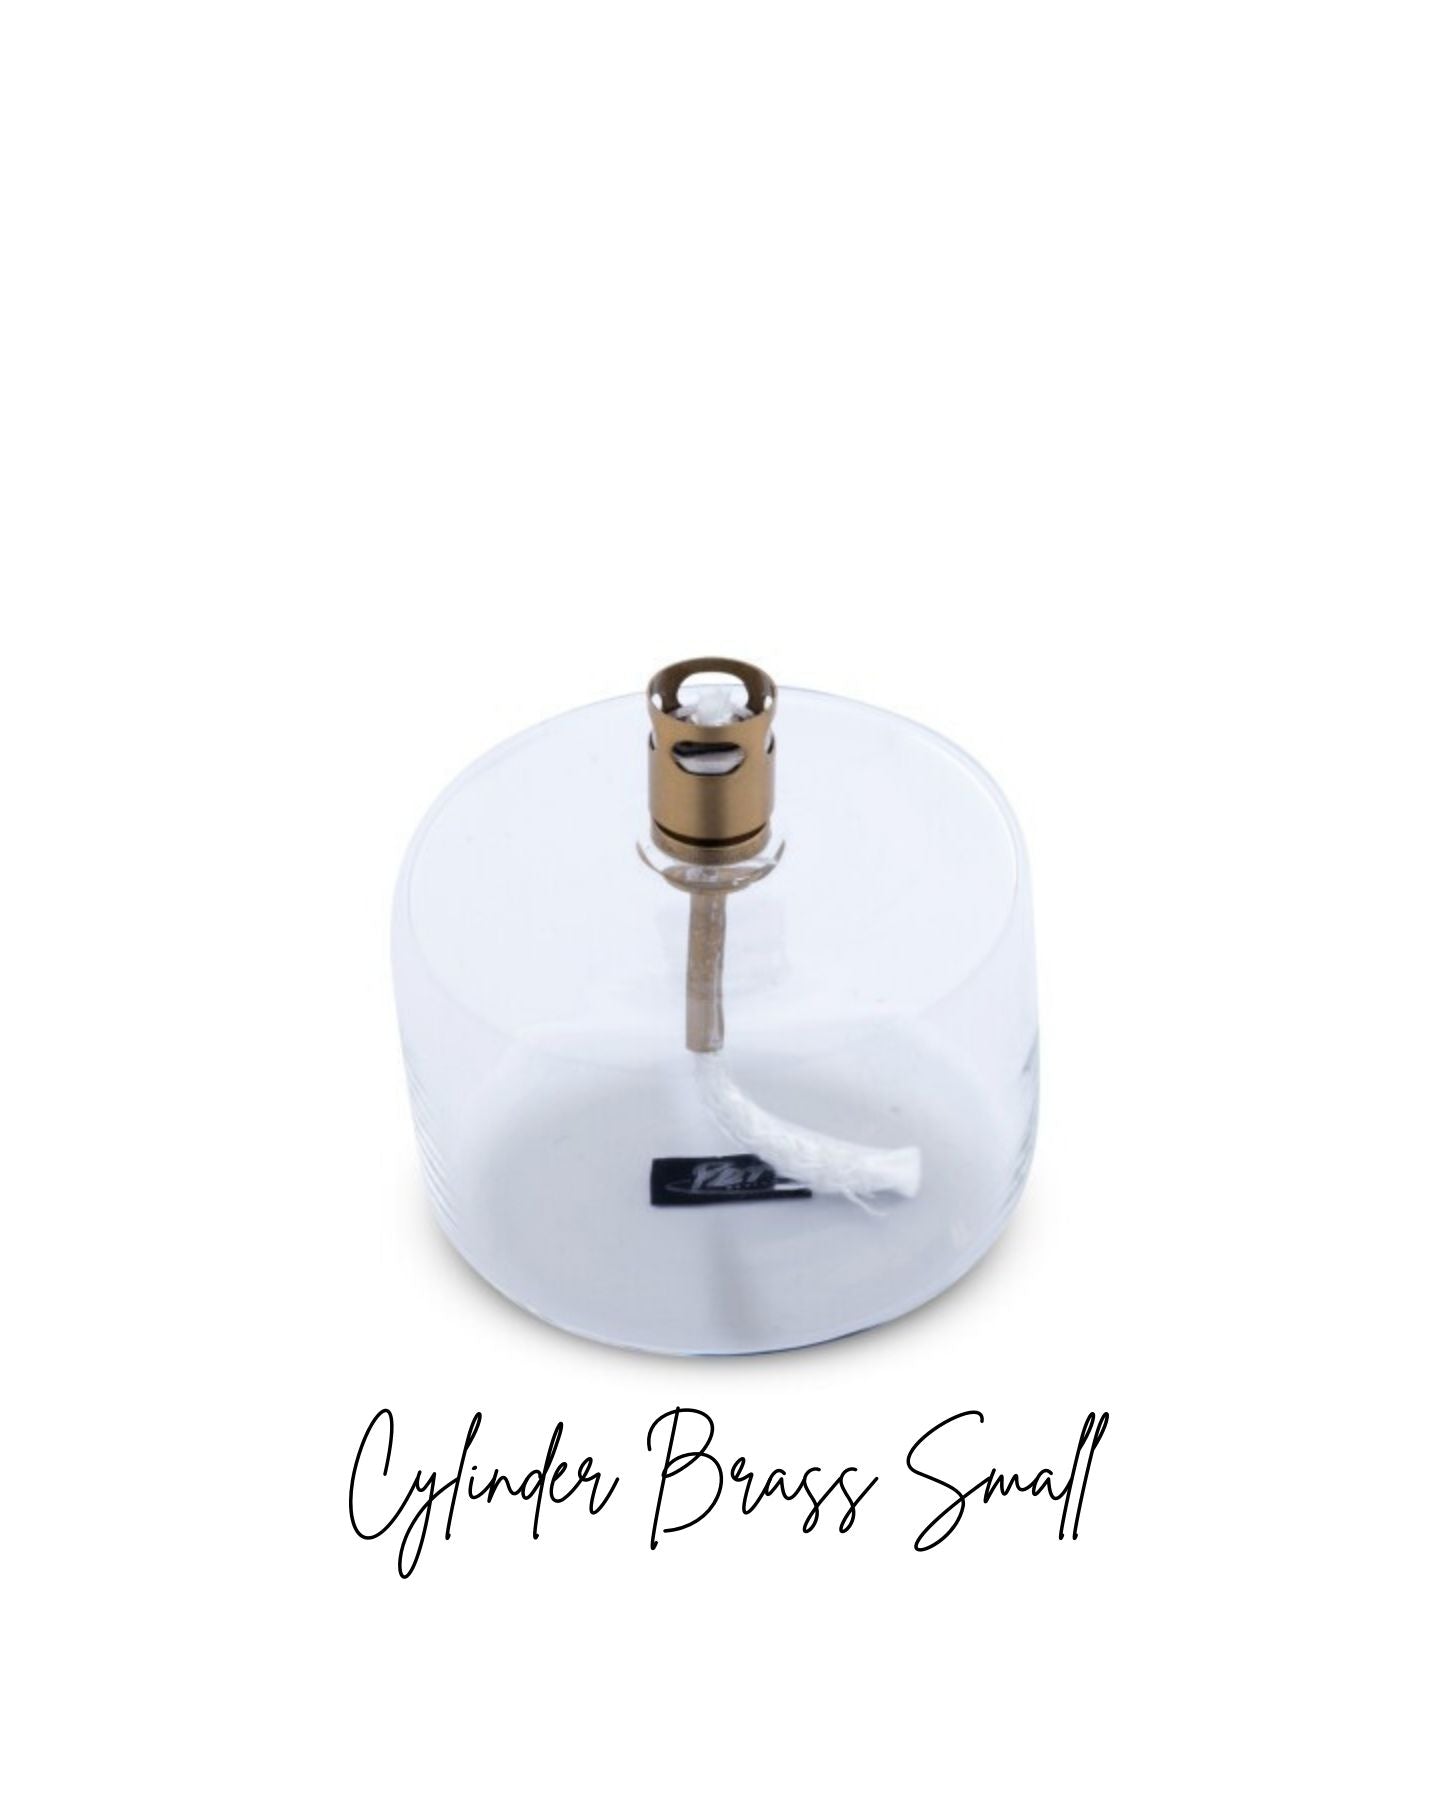 Oil Lamp Cylinder Brass